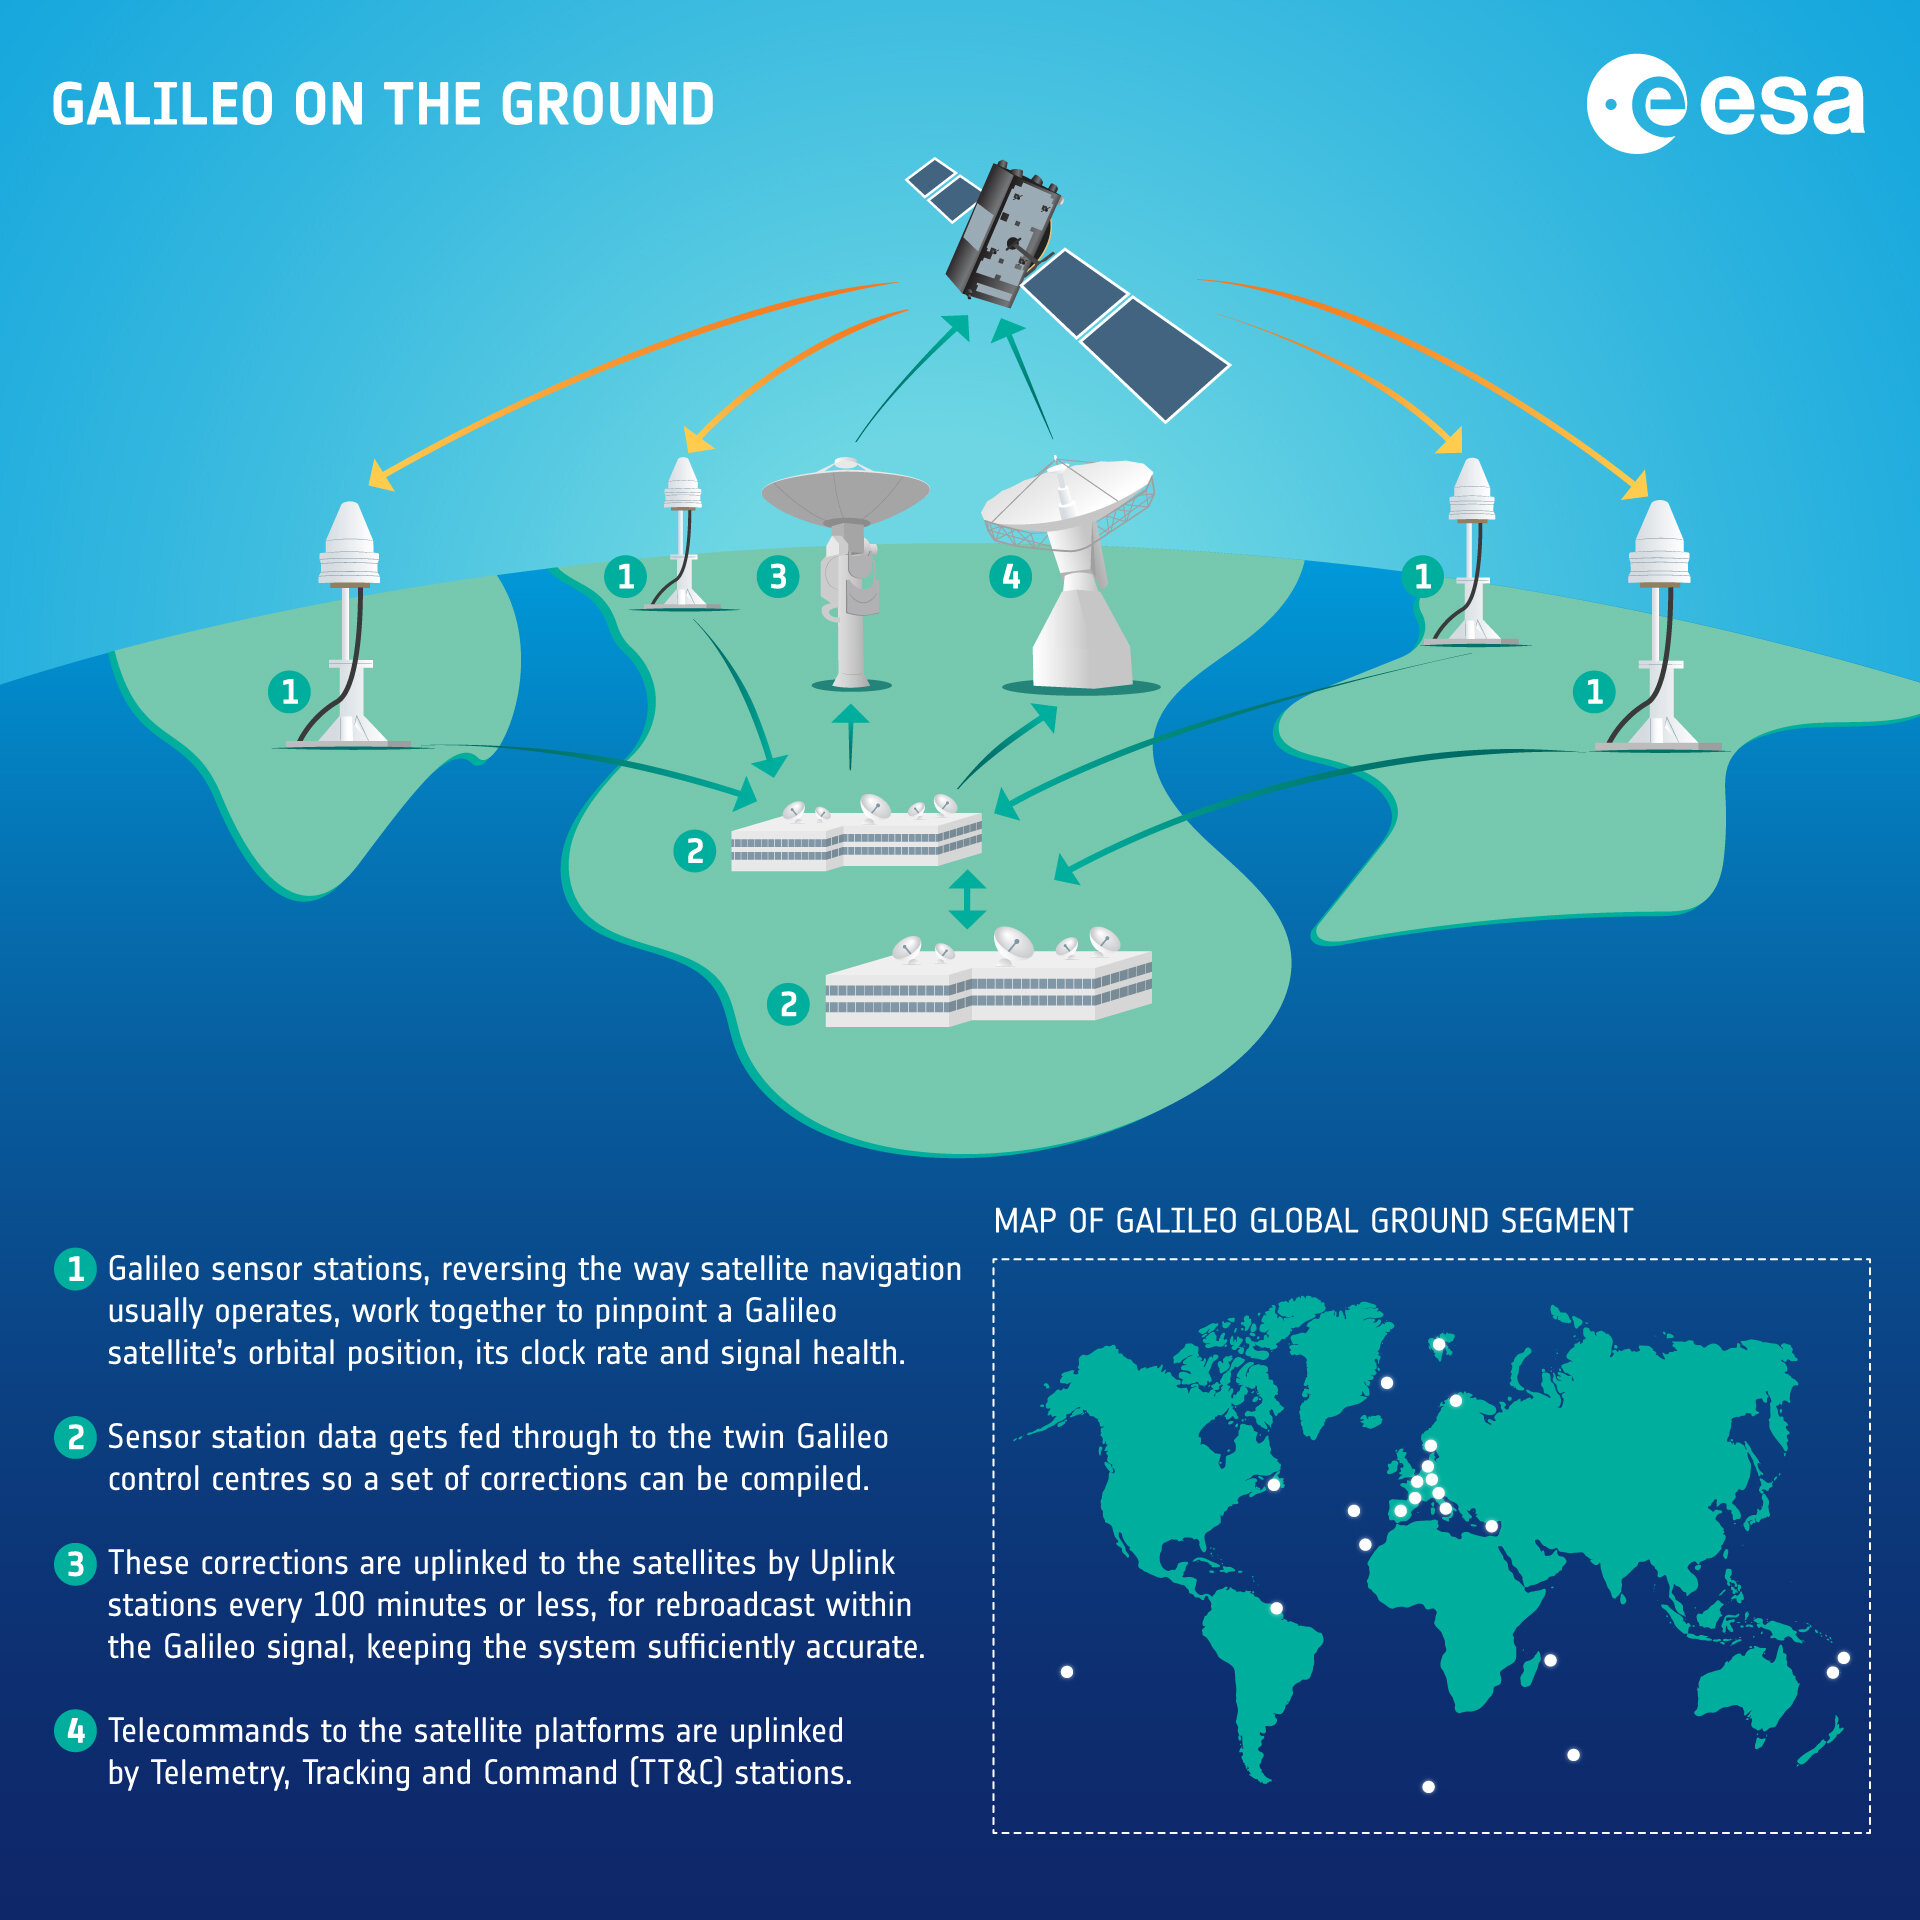 Galileo on the ground – infographic